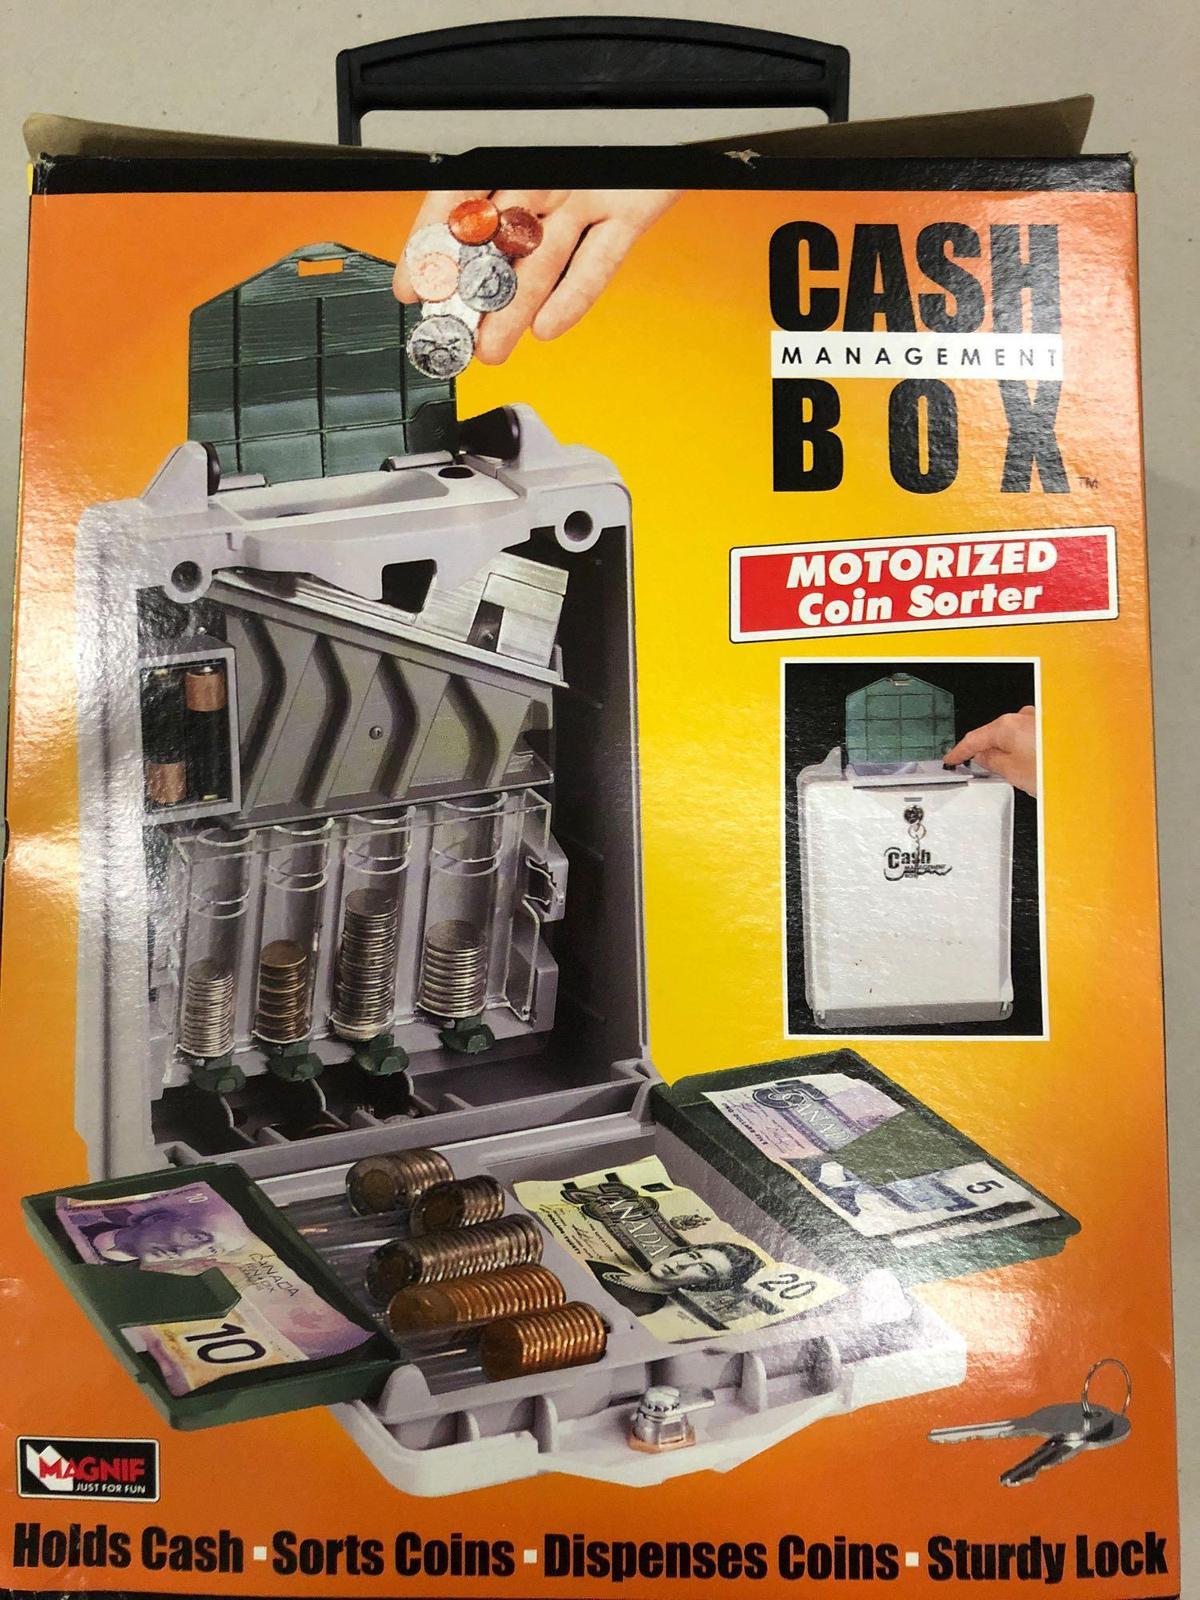 Cash Management Box w/ Motorized Coin Sorter (Pallet 1)